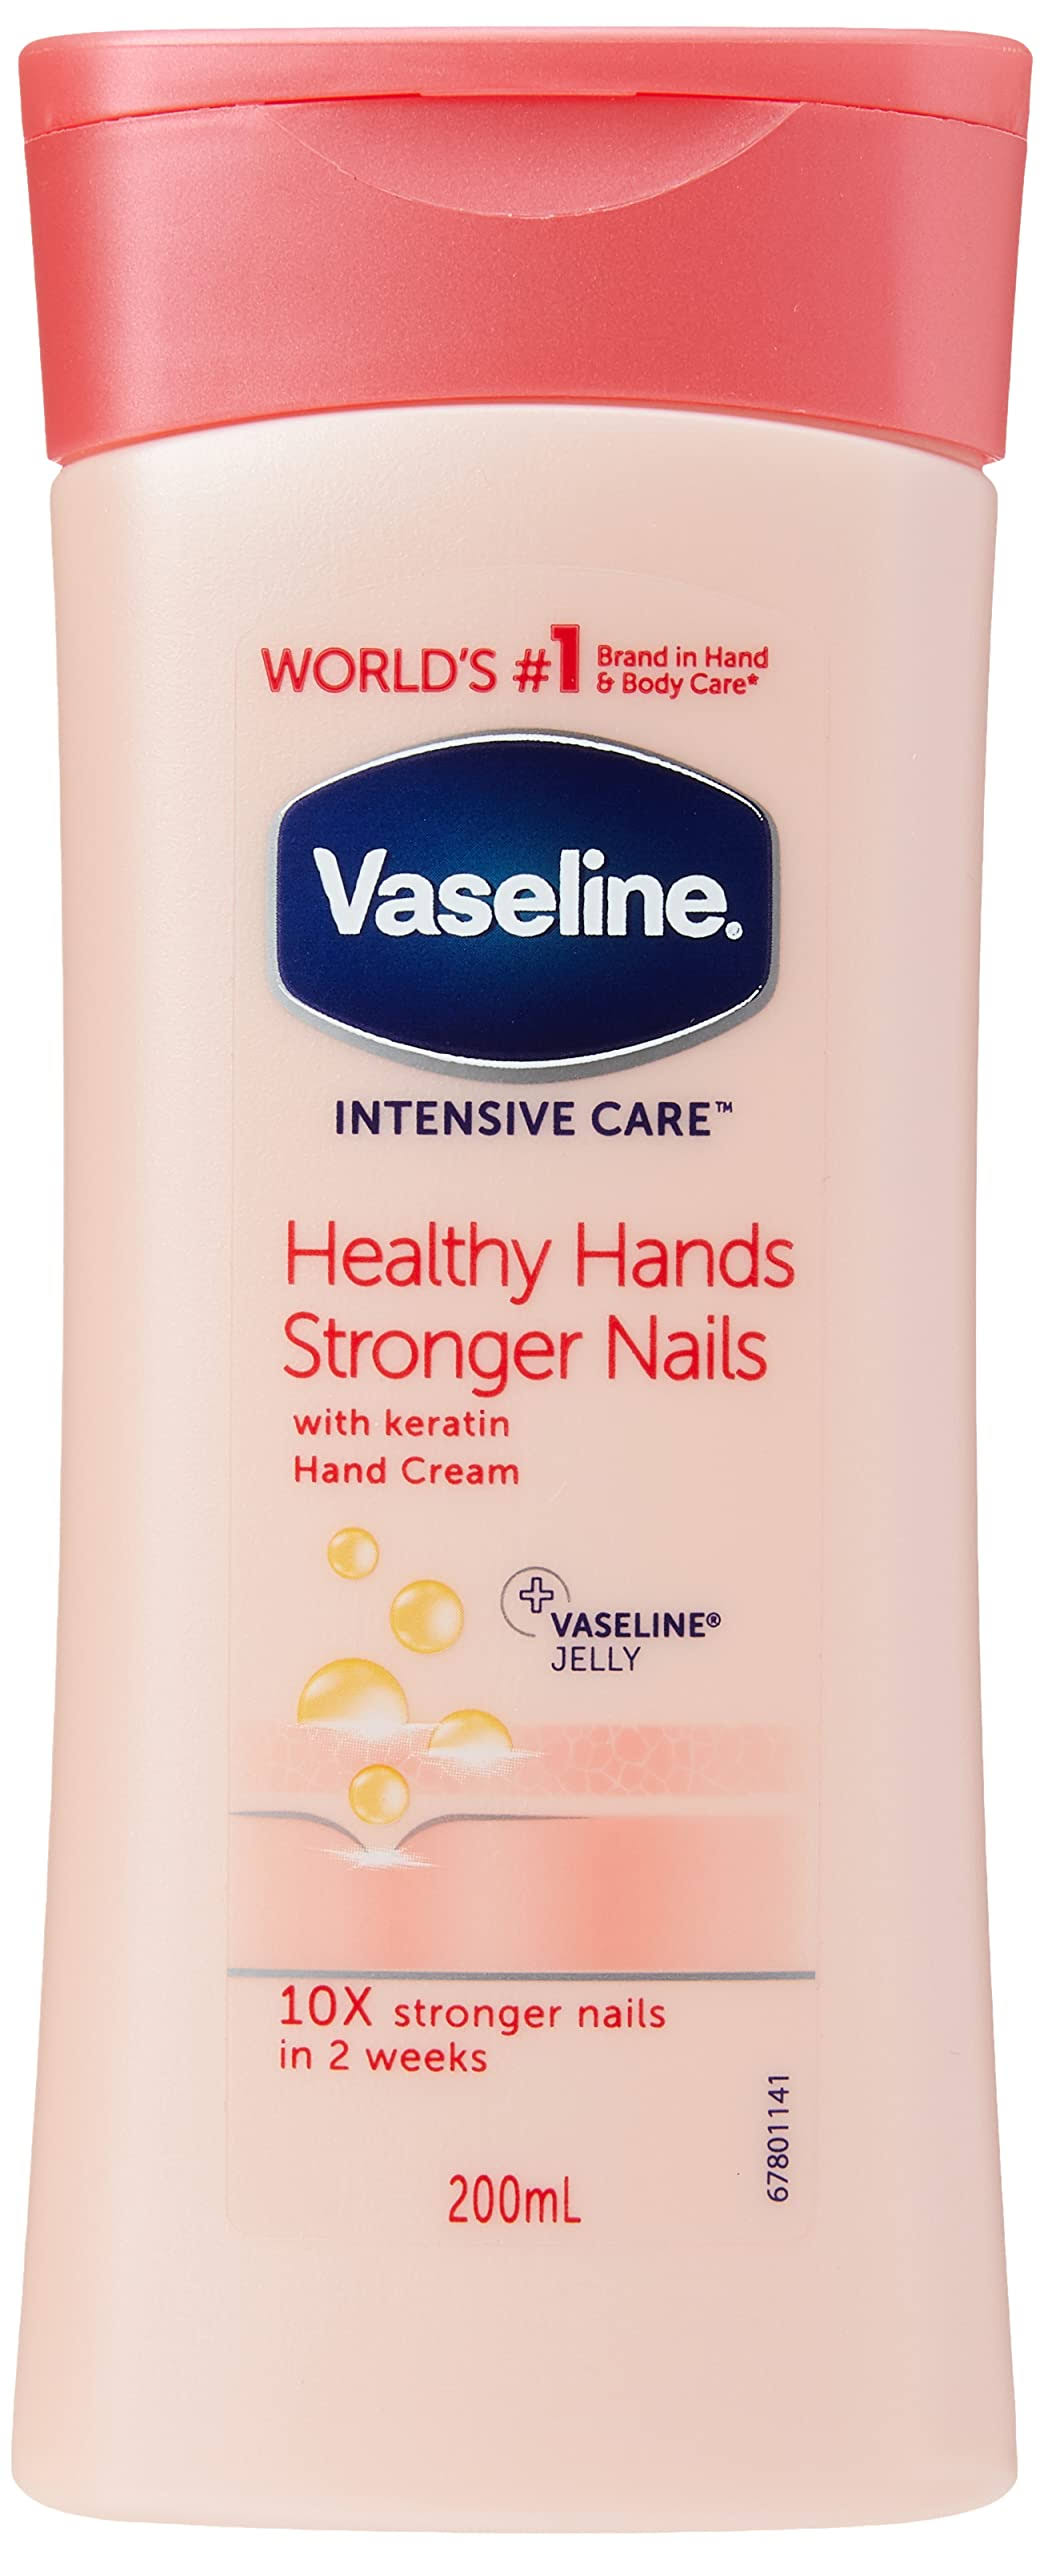 Vaseline Healthy Hands Stronger Nails Hand Cream - 200ml